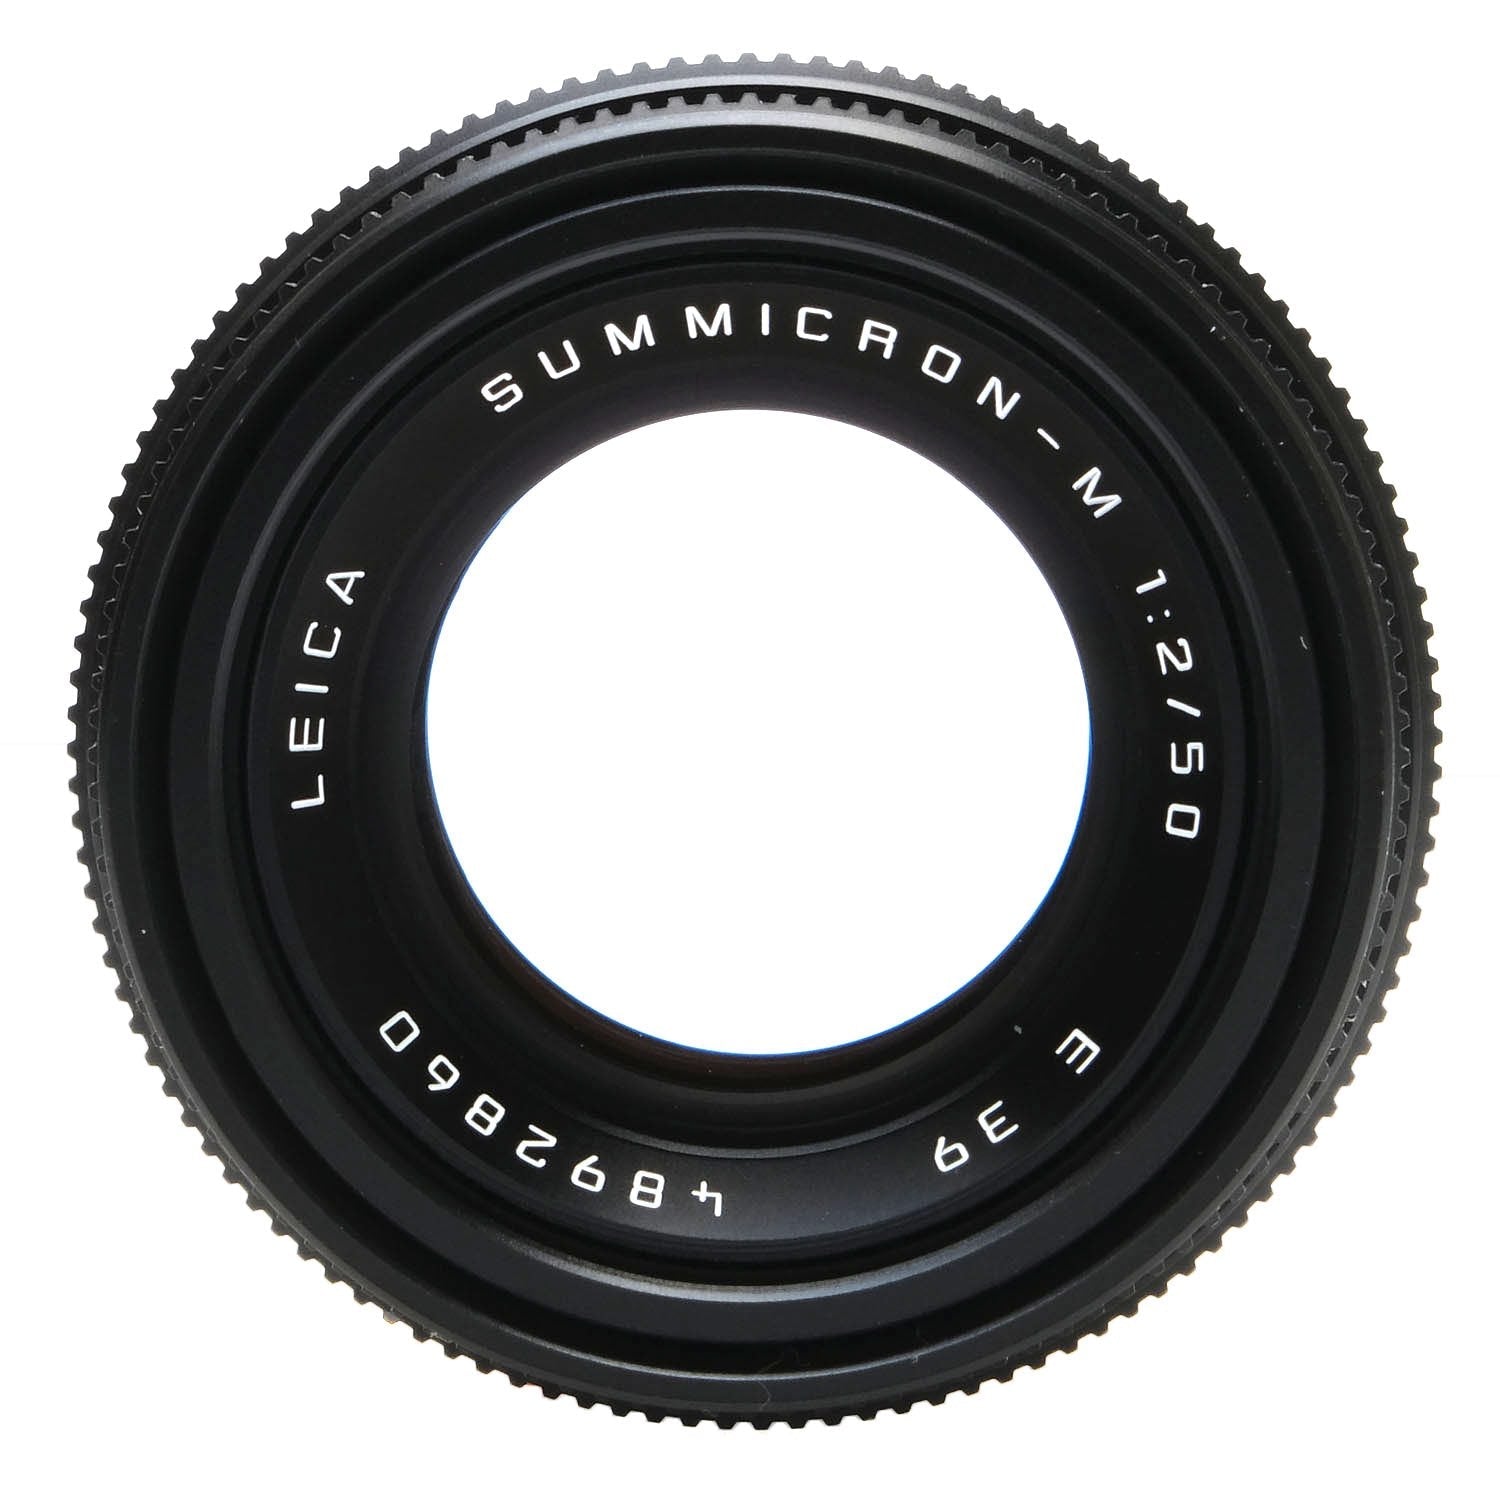 Leica 50mm f2 Summicron, Black, Open Box 4892860